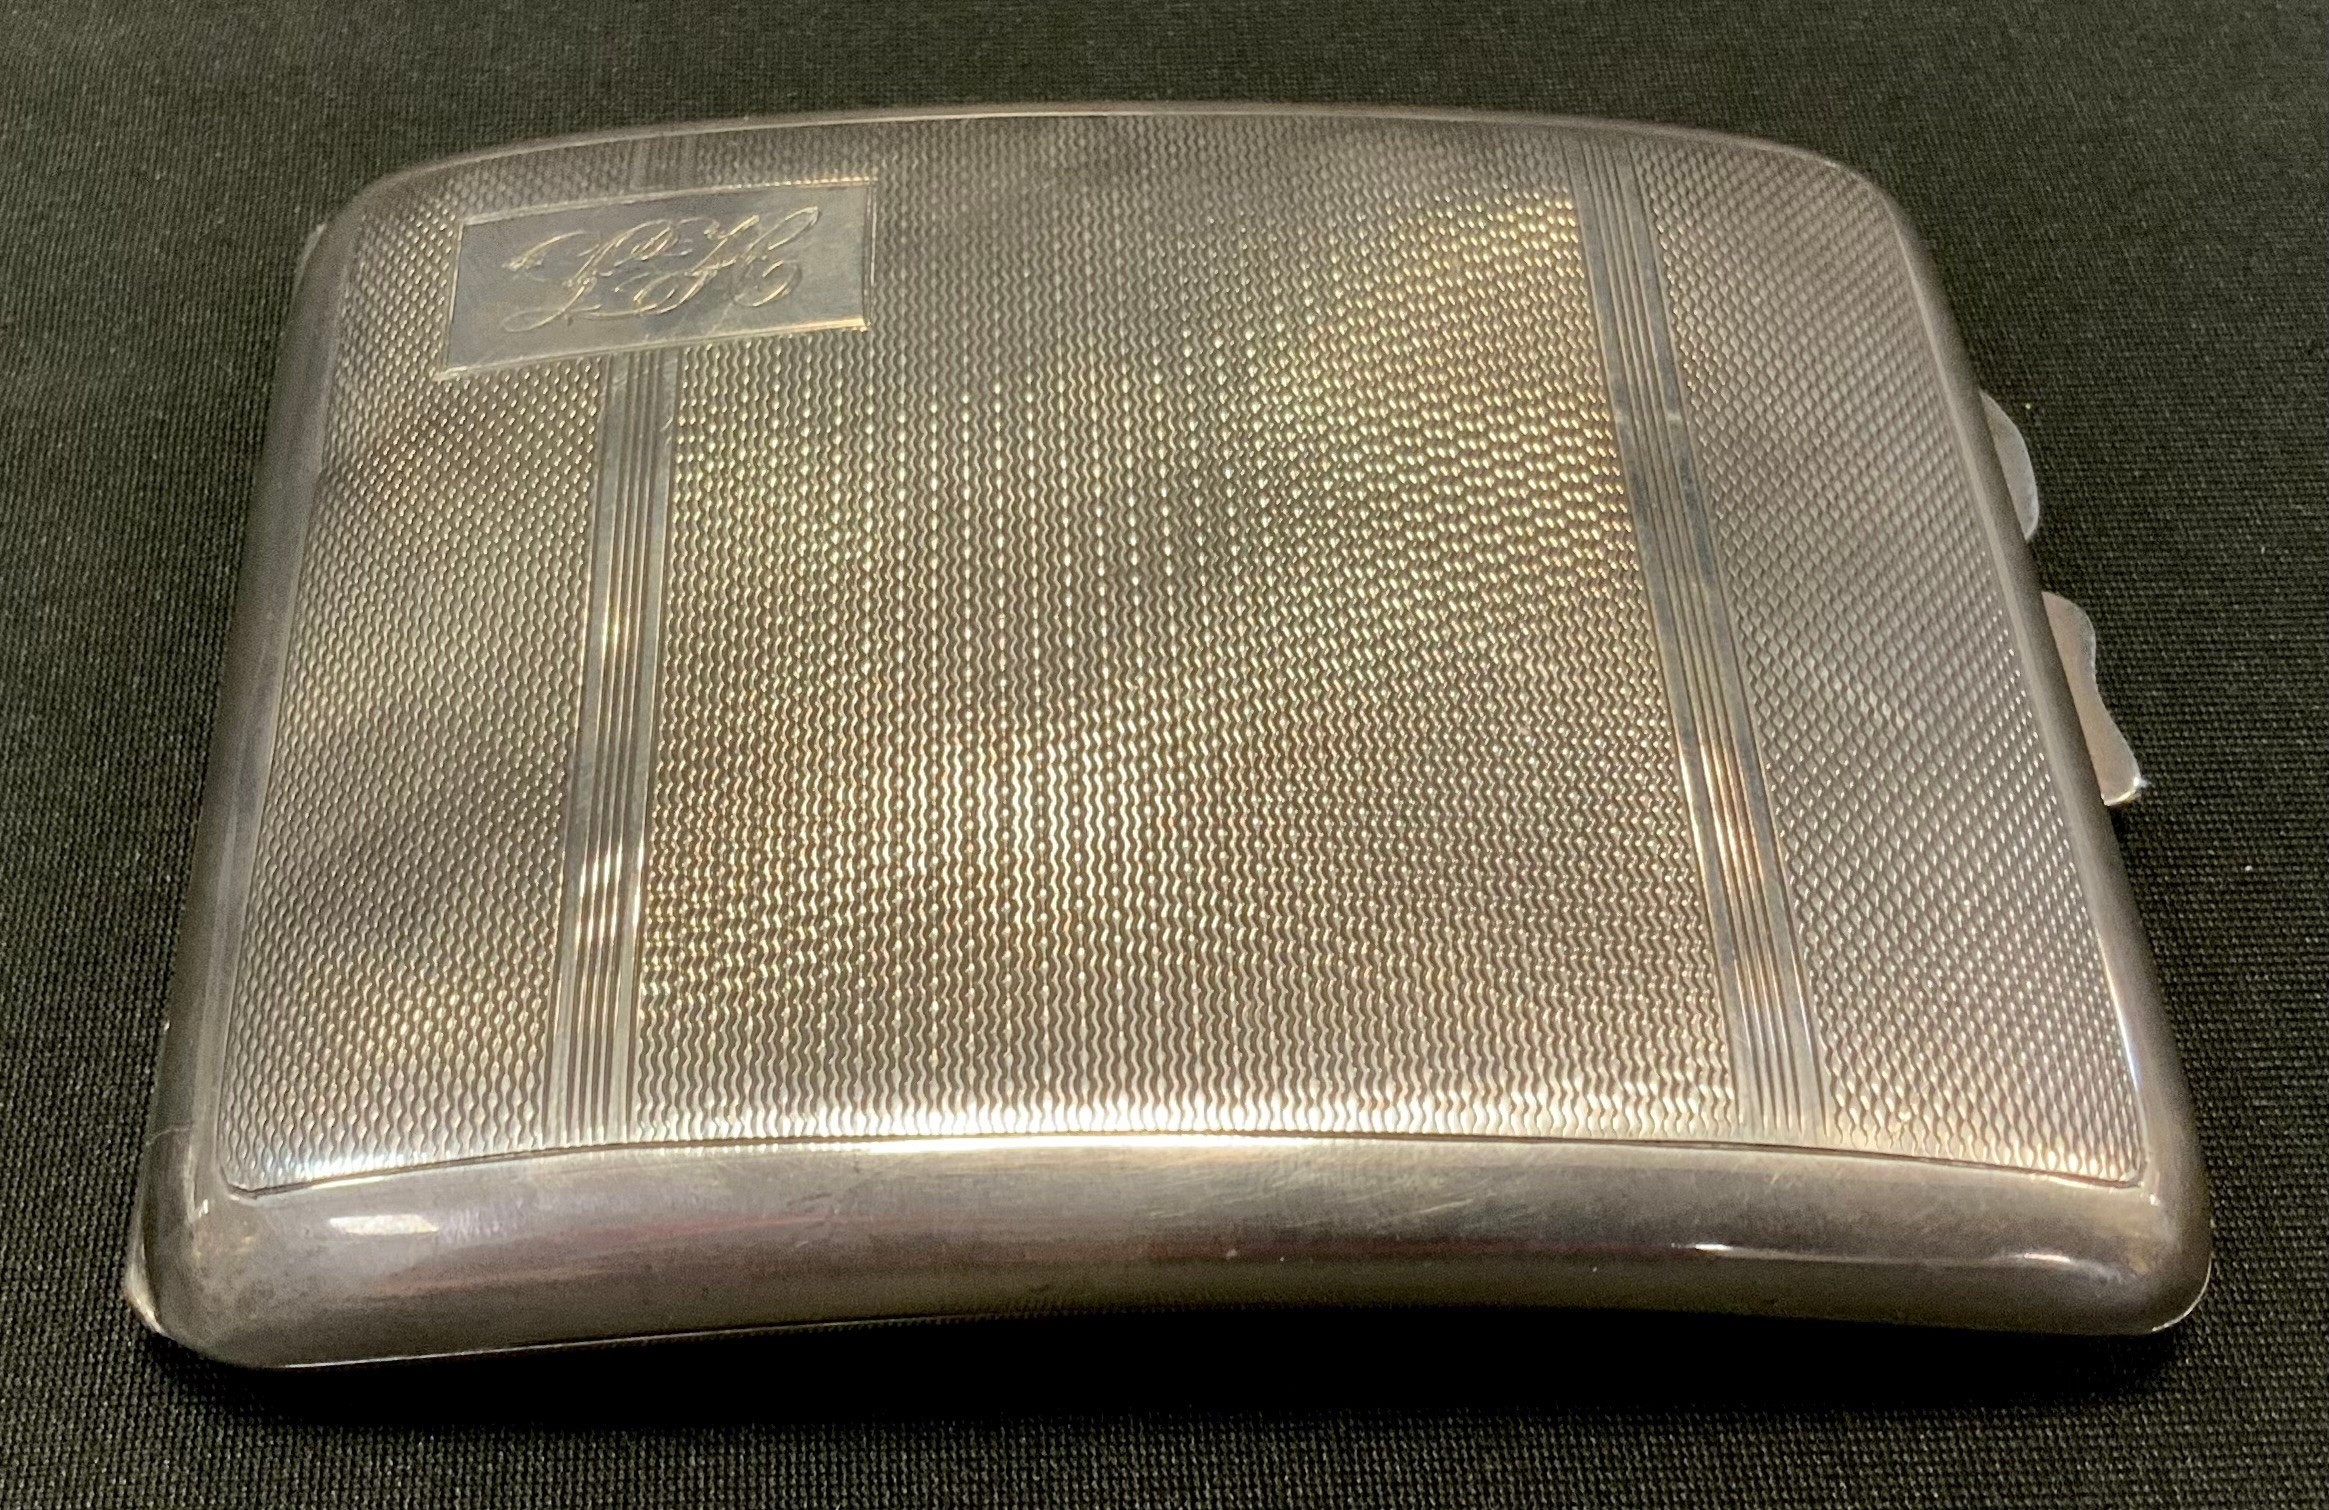 A silver cigarette case, Birmingham 1936, 141.3g